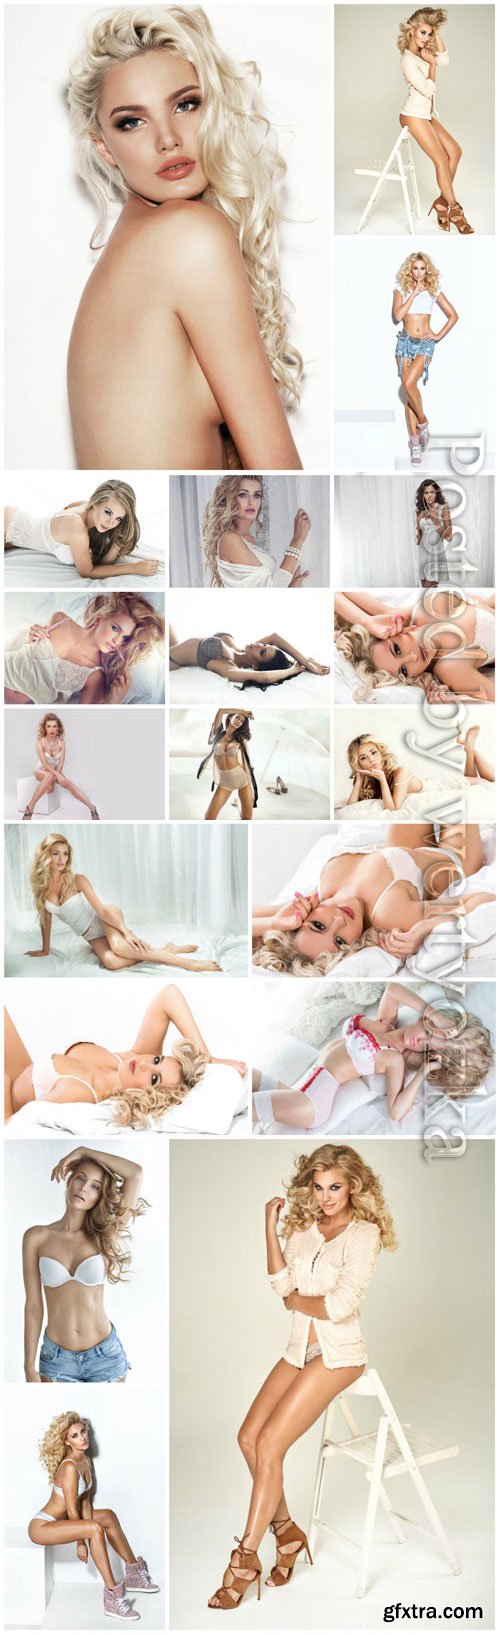 Beautiful blonde girls in lingerie stock photo